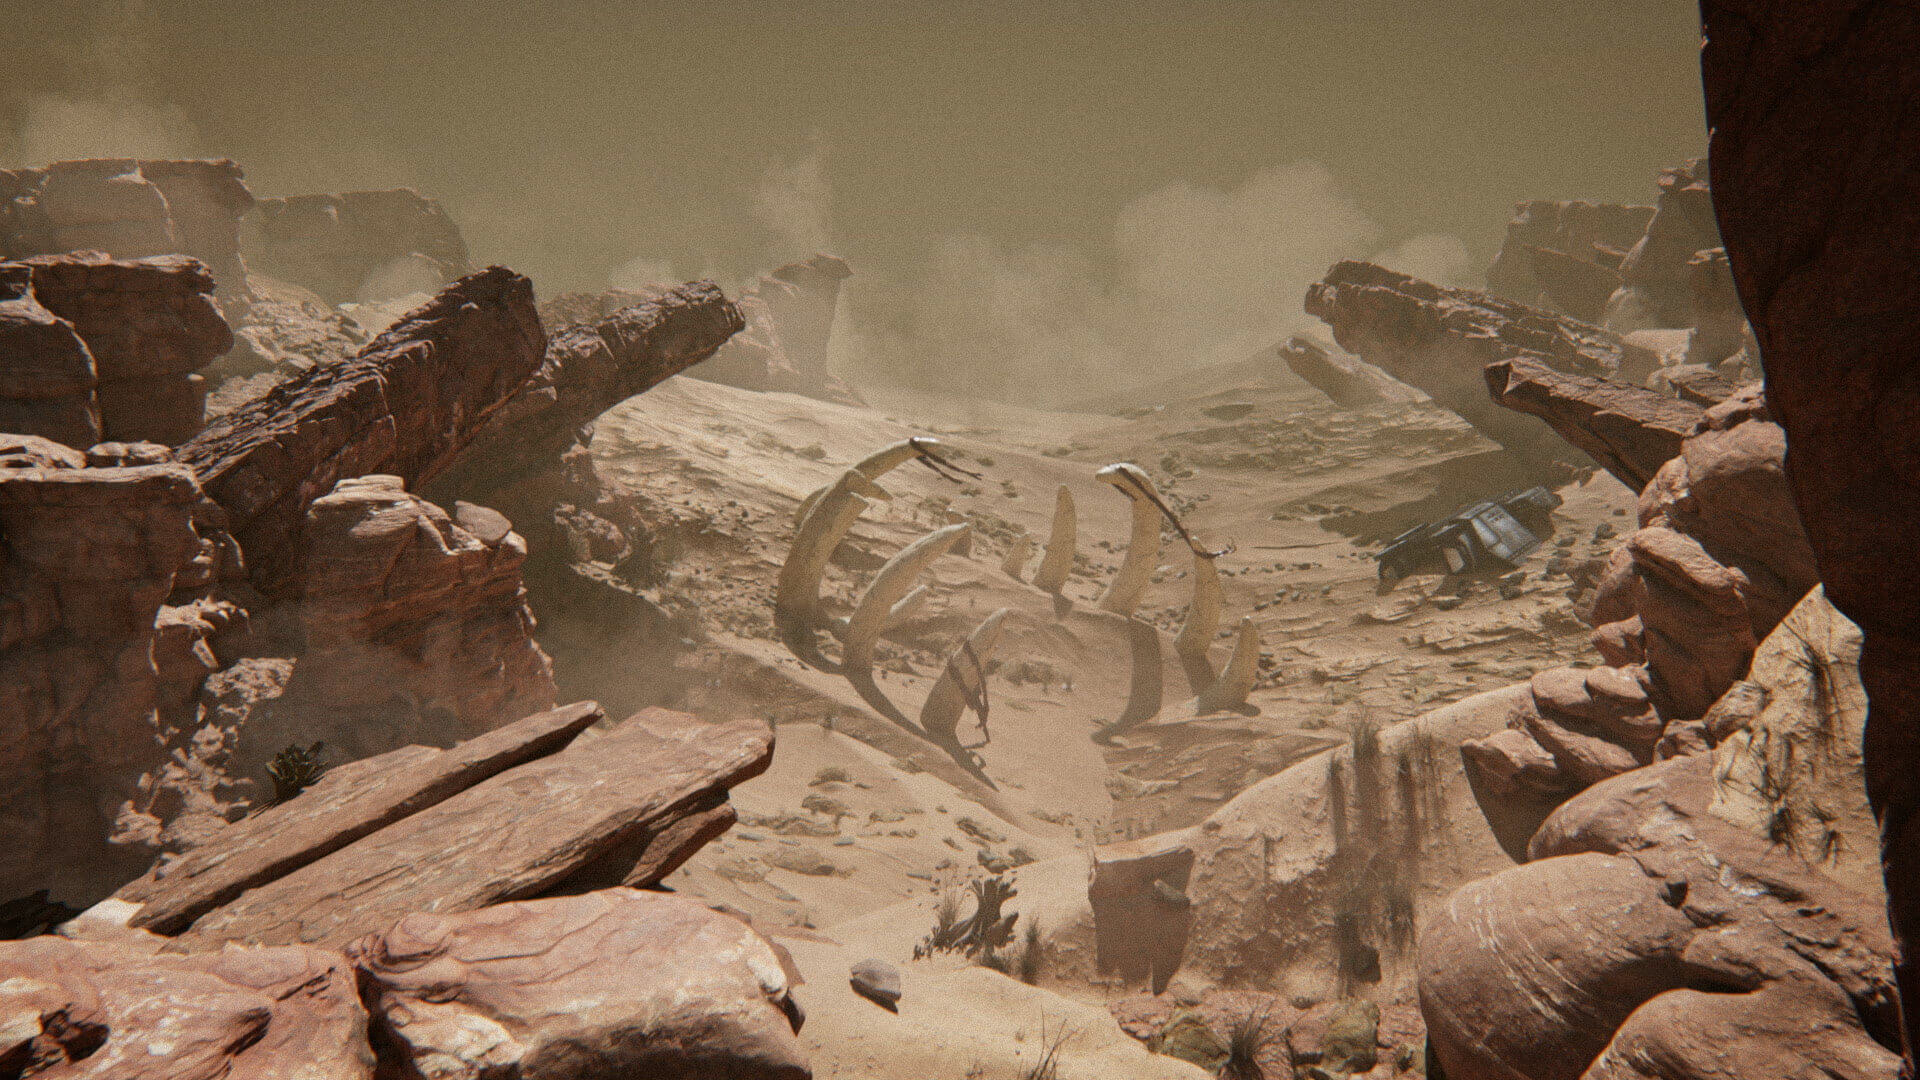 Skeleton in desert for Stellaris Cinematic. Magoo Gaming Cinematics